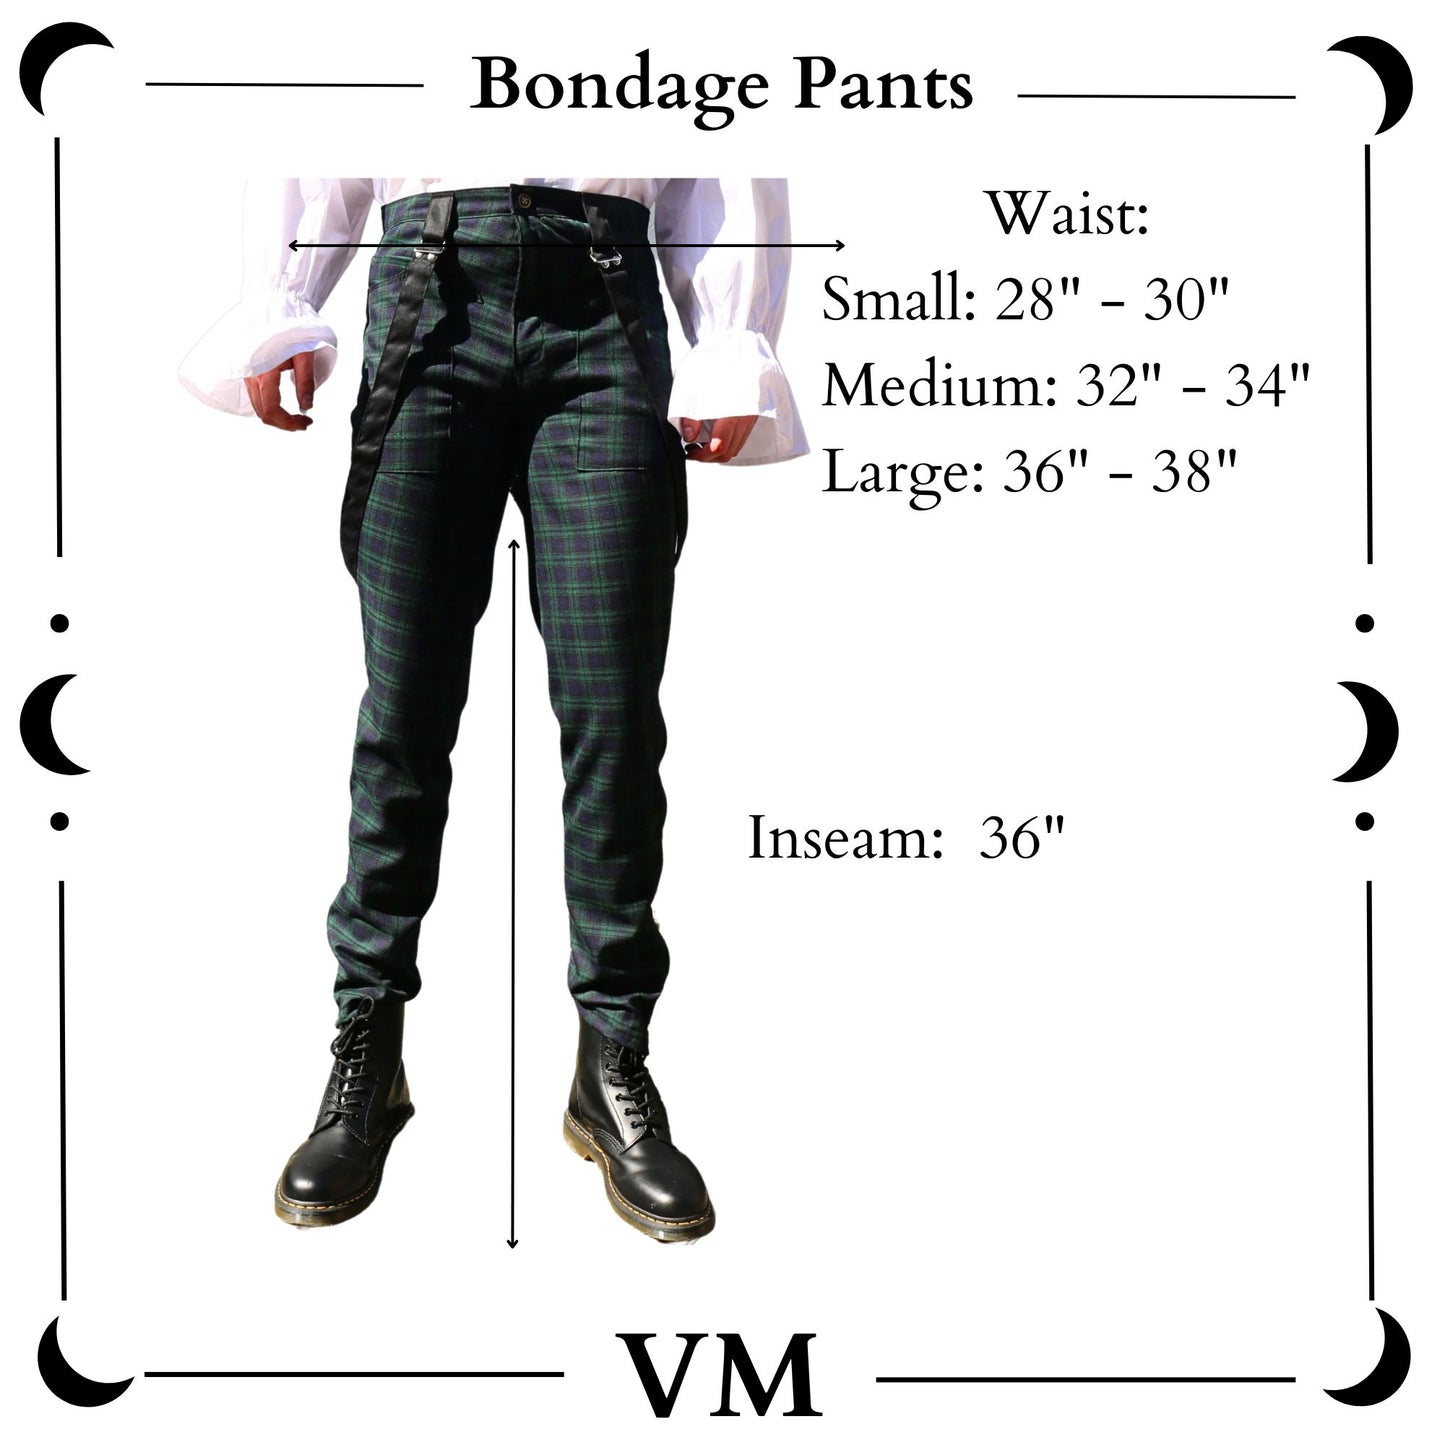 The VM Boot Cut Pants